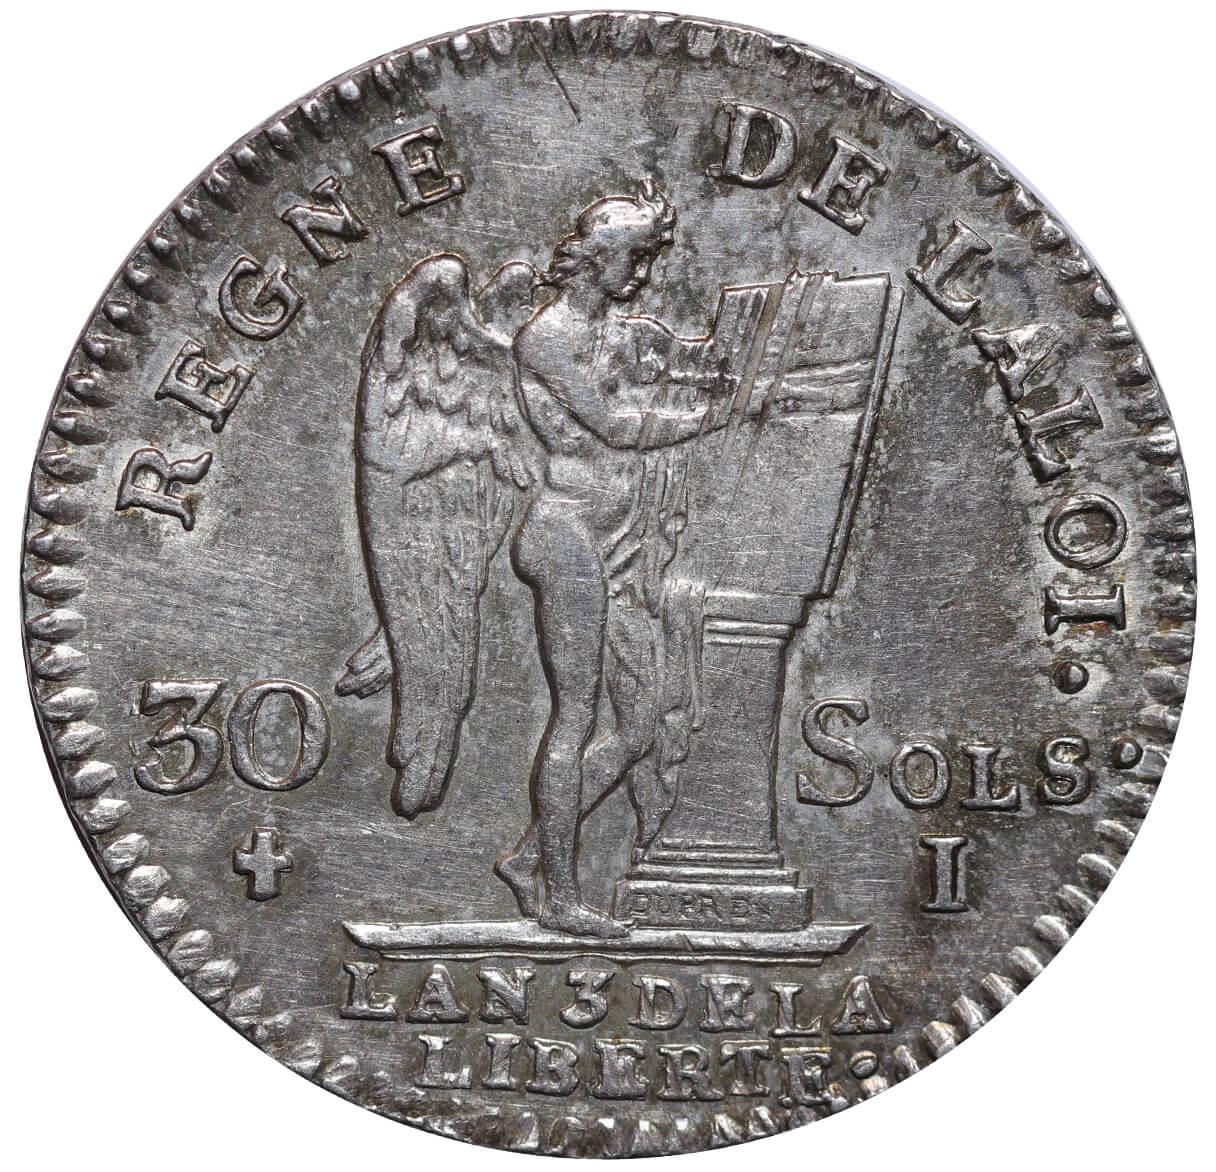 France, 30 Sols, 1791 year, I - Image 3 of 3